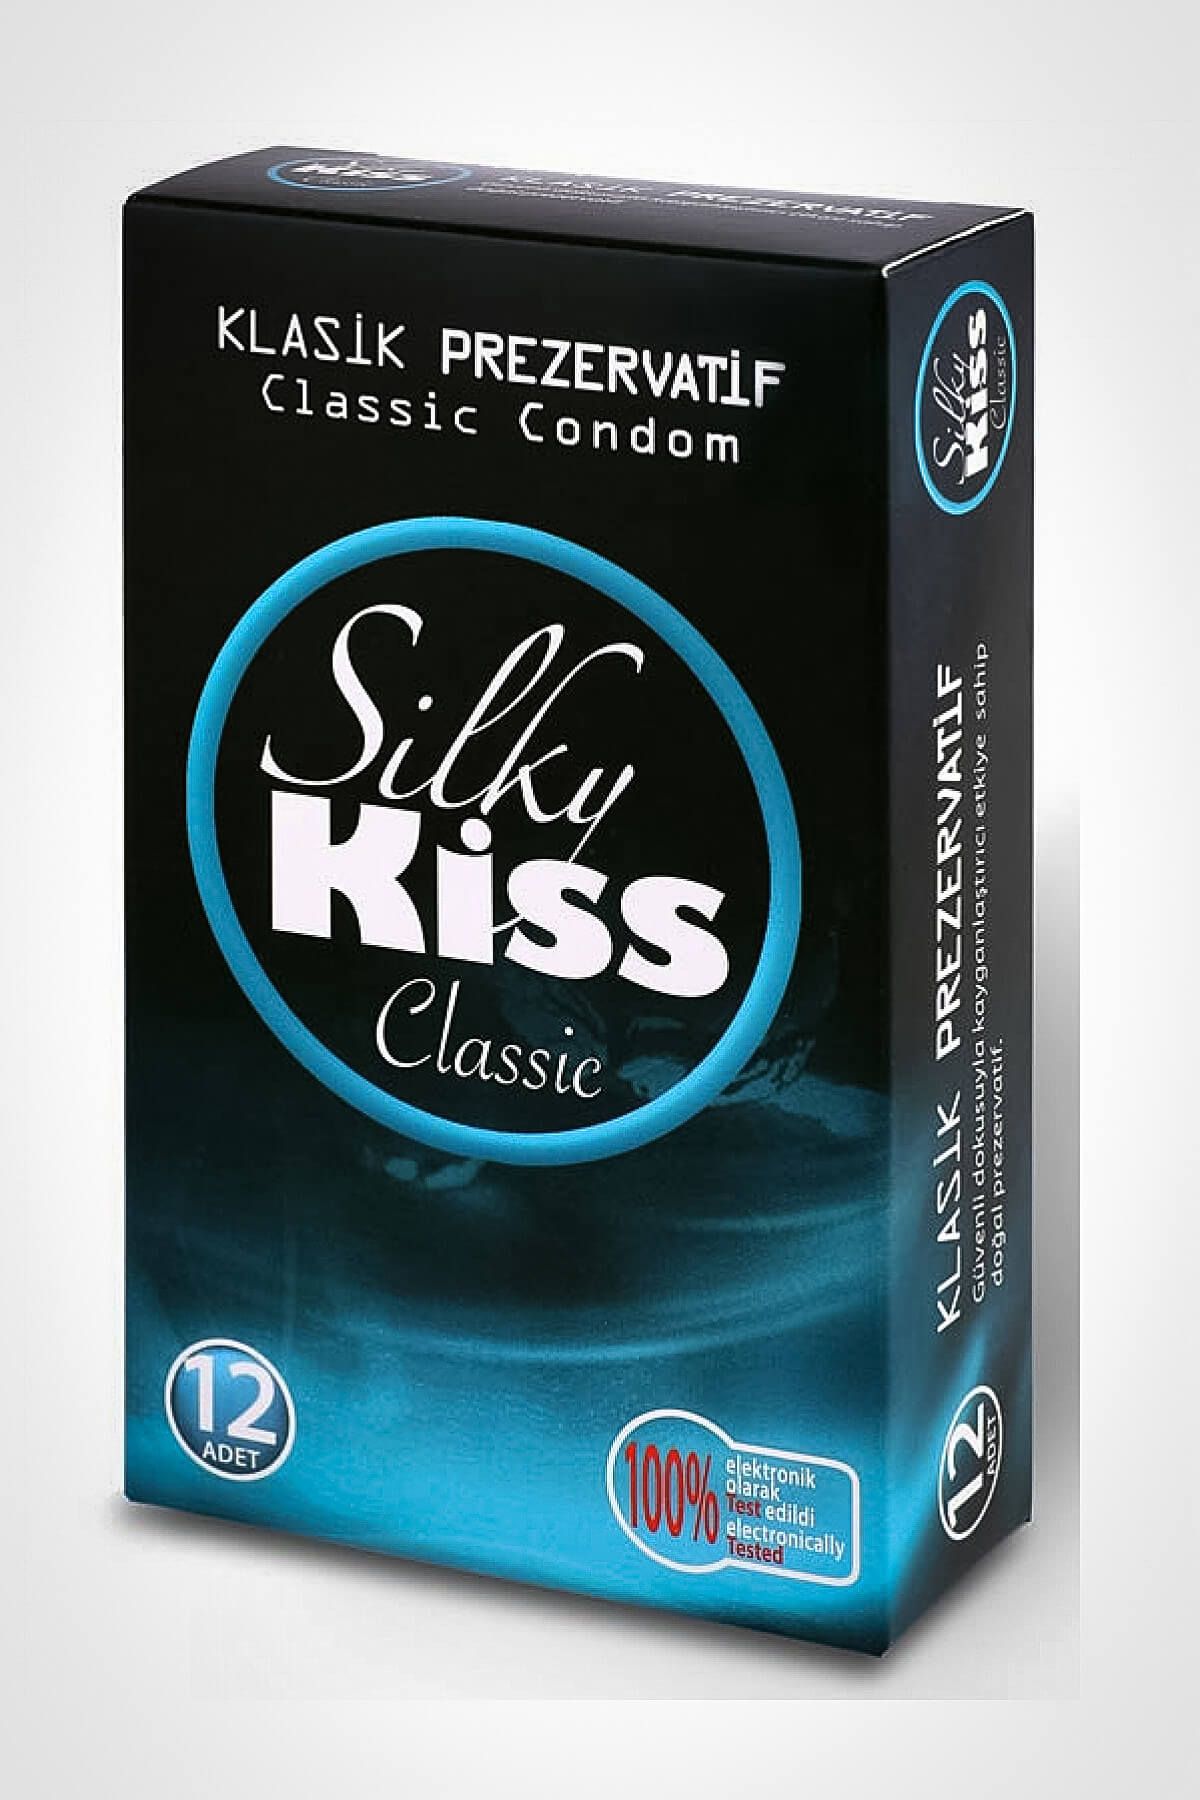 Silky Kiss Klasik Prezervatif 12 Adet Condom